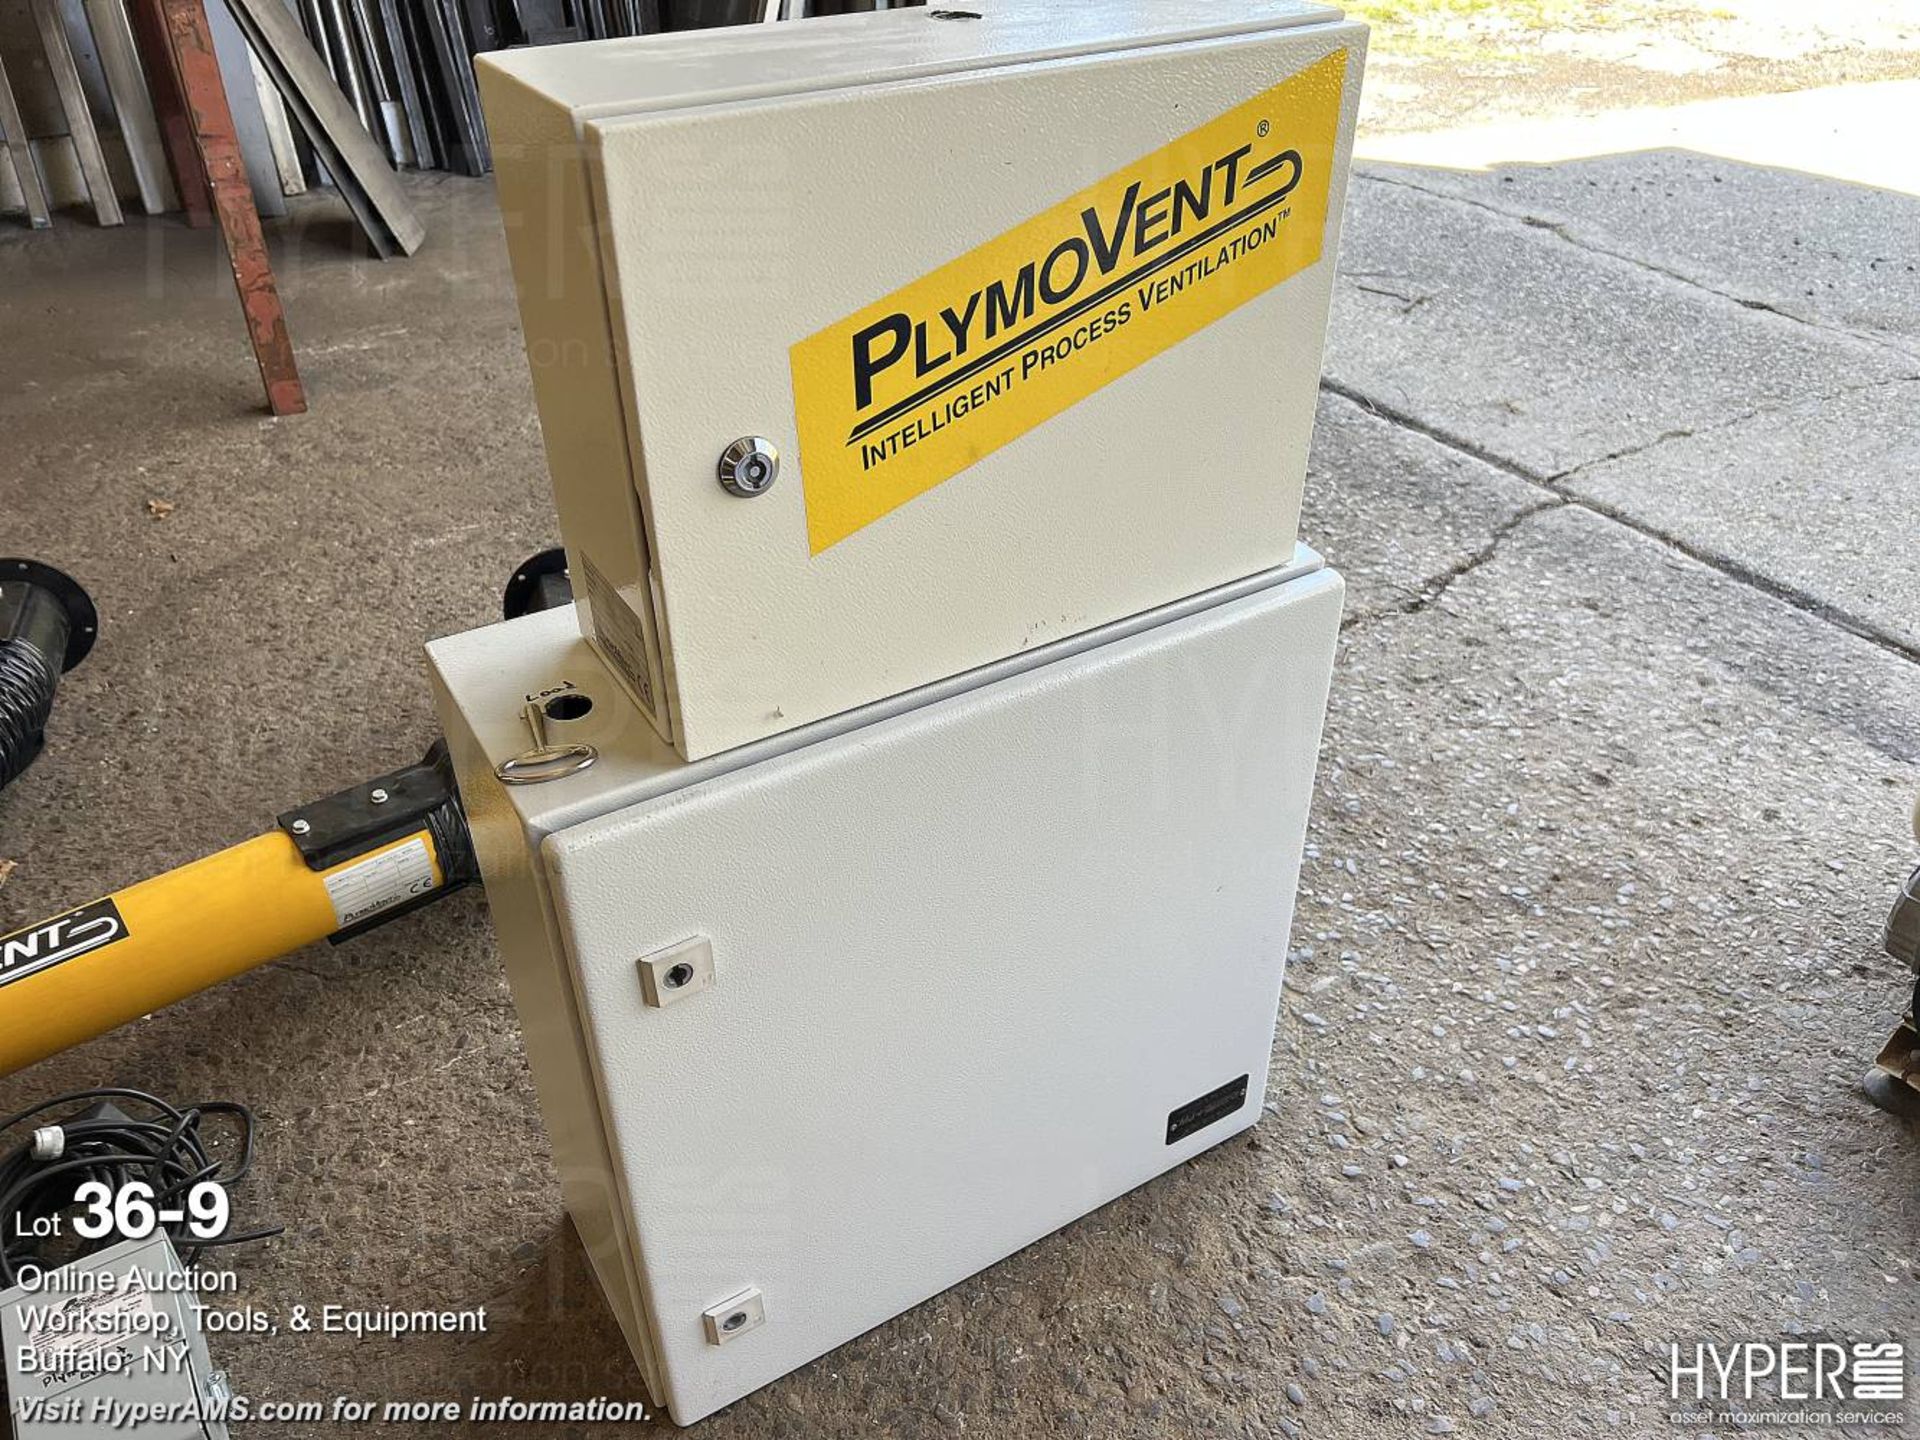 Plymovent intelligent ventilation system - Image 9 of 12